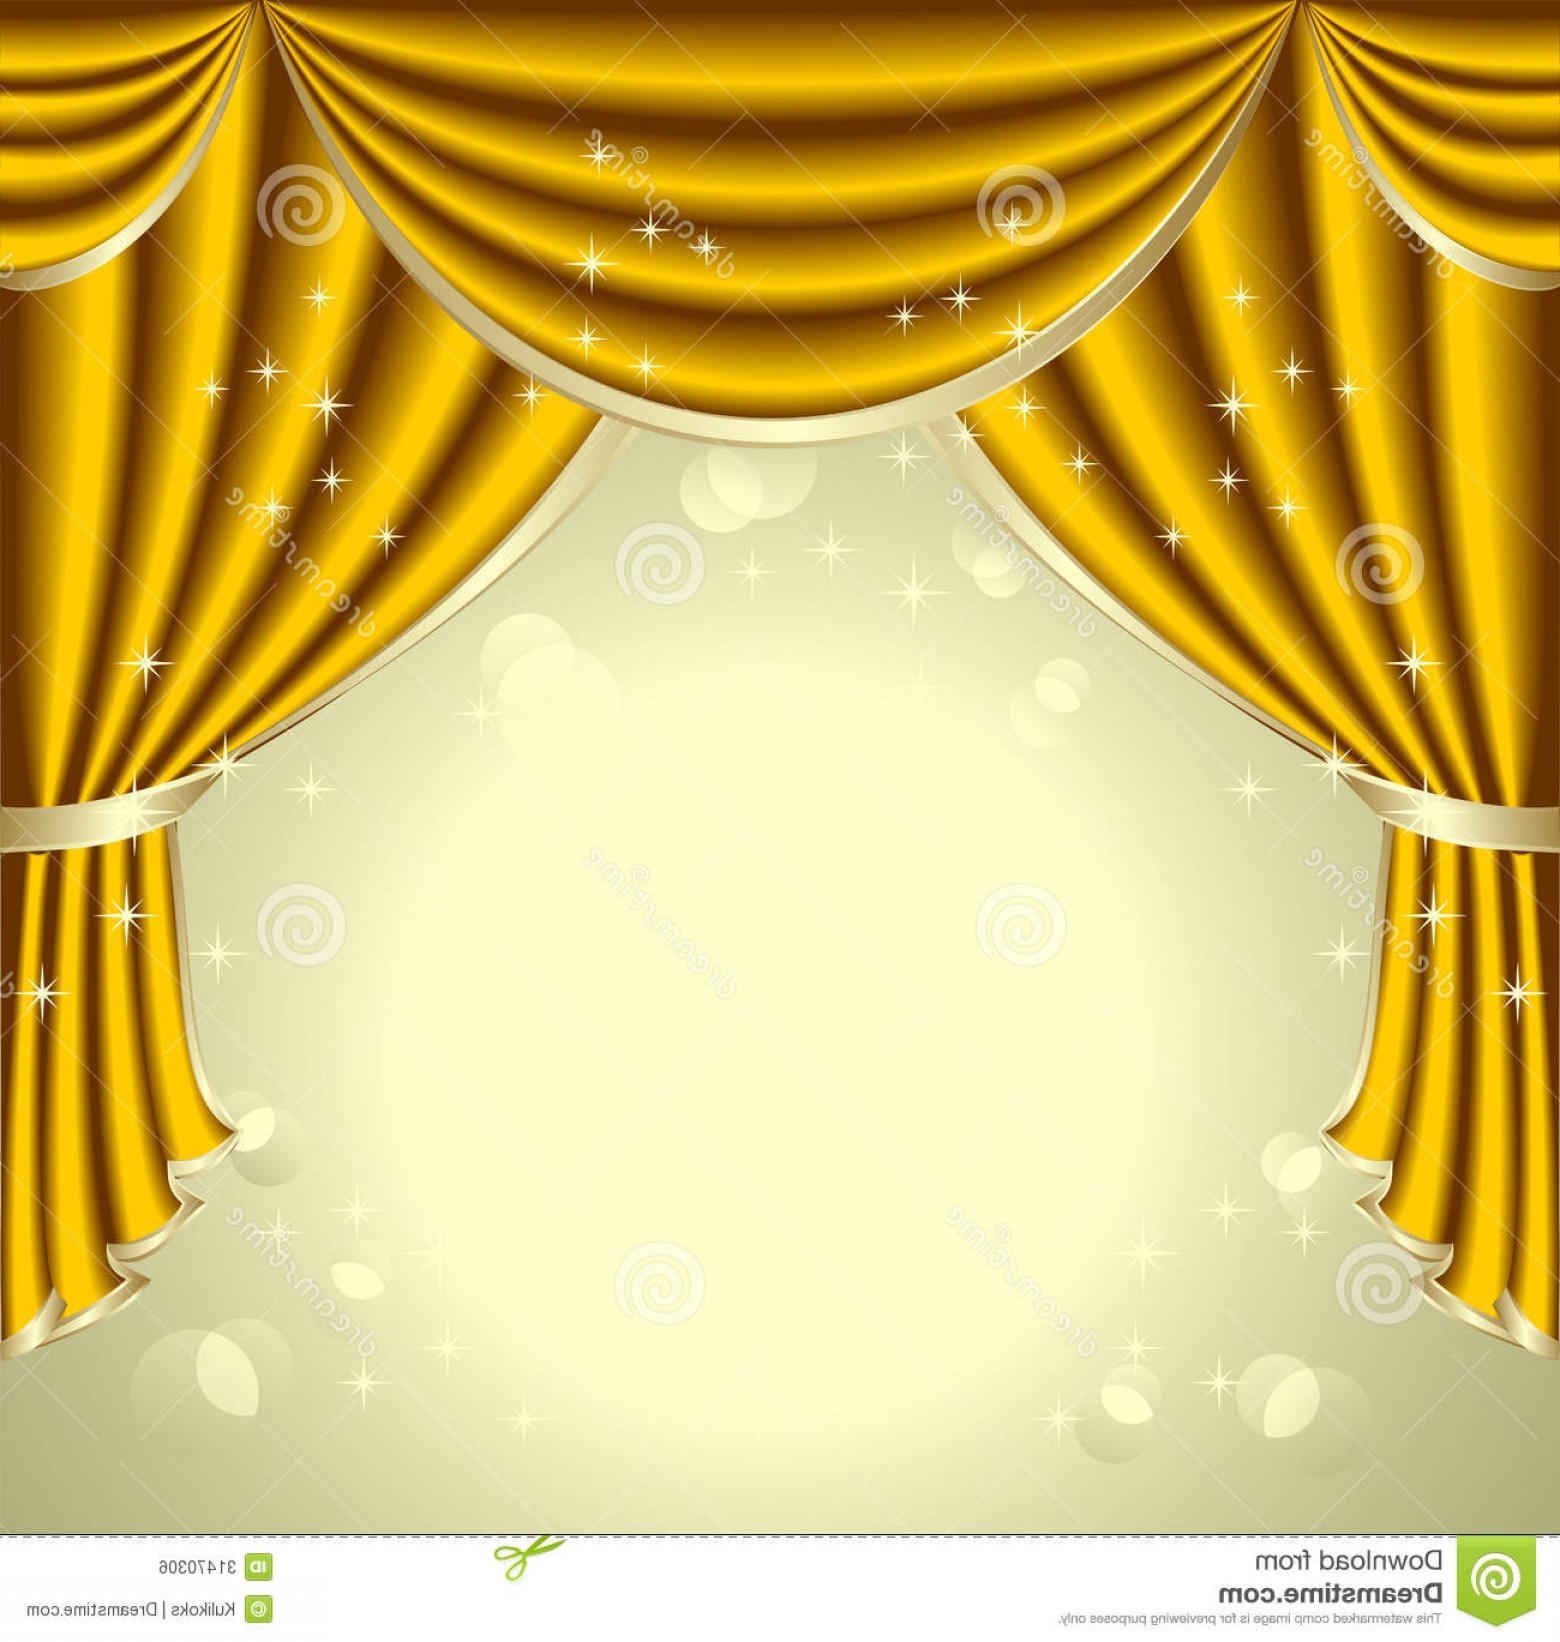 Royalty Free Stock Image Background Gold Drapes Olive